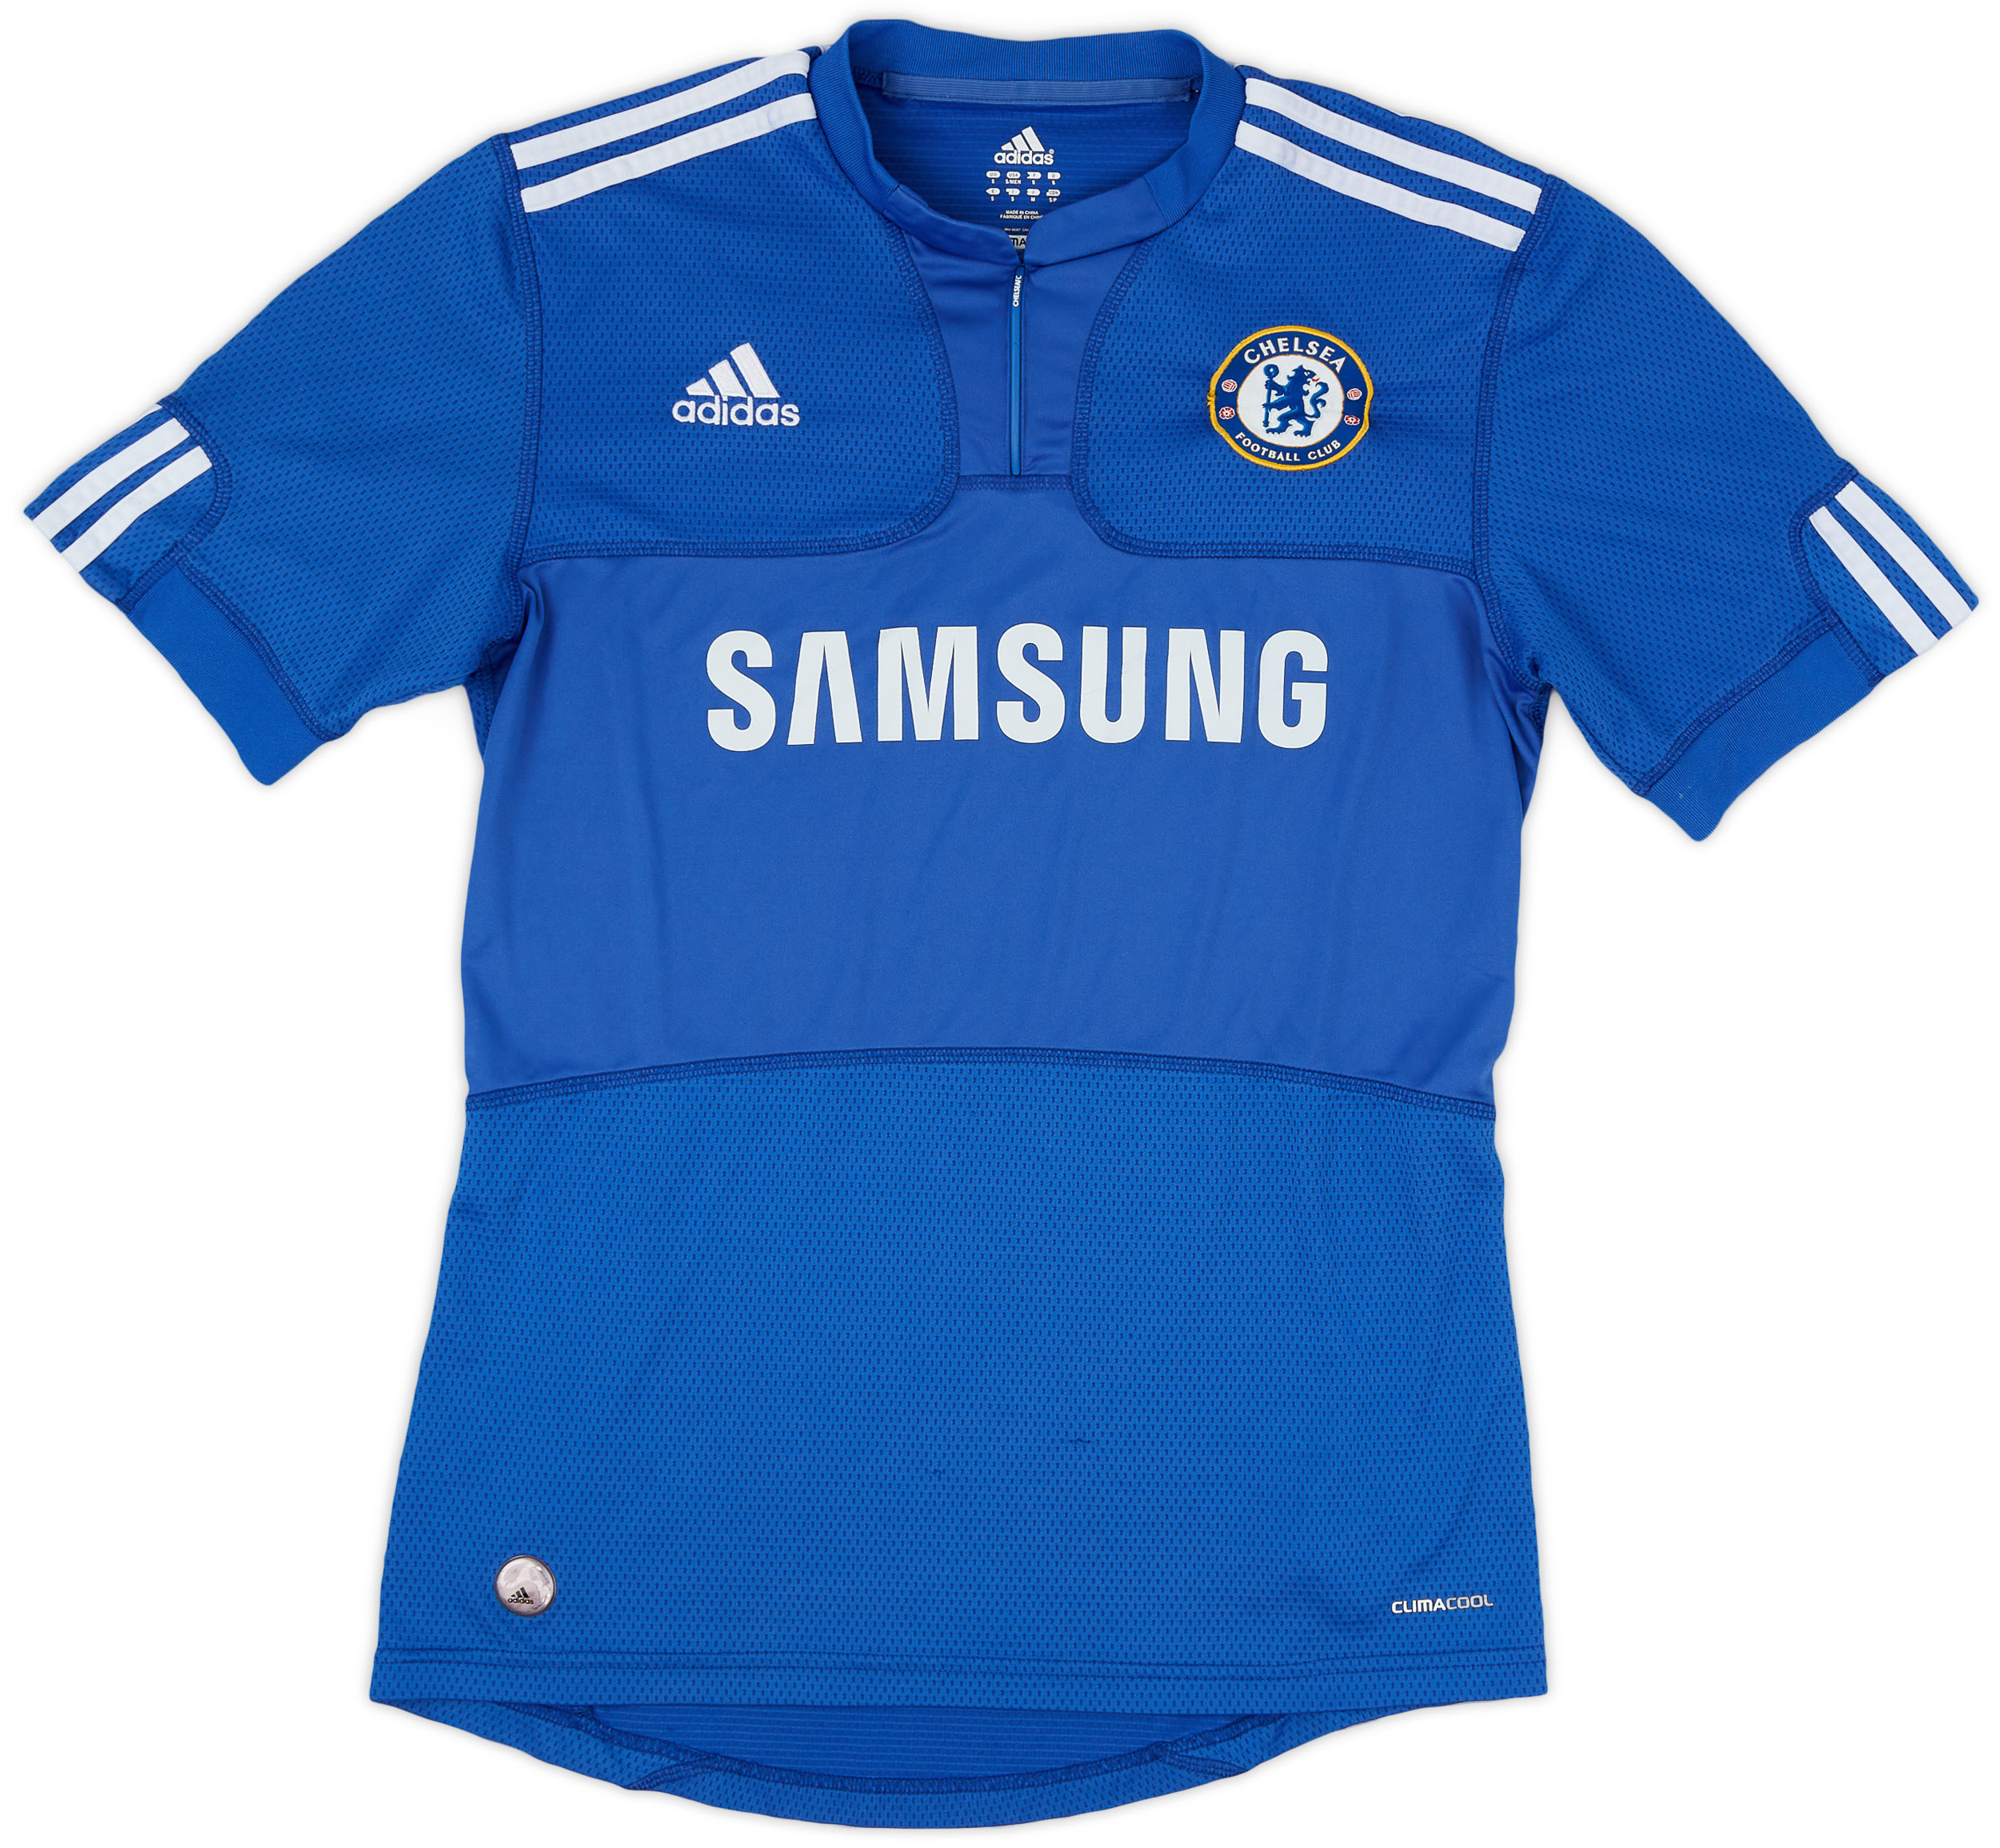 2009-10 Chelsea Home Shirt - 5/10 - ()